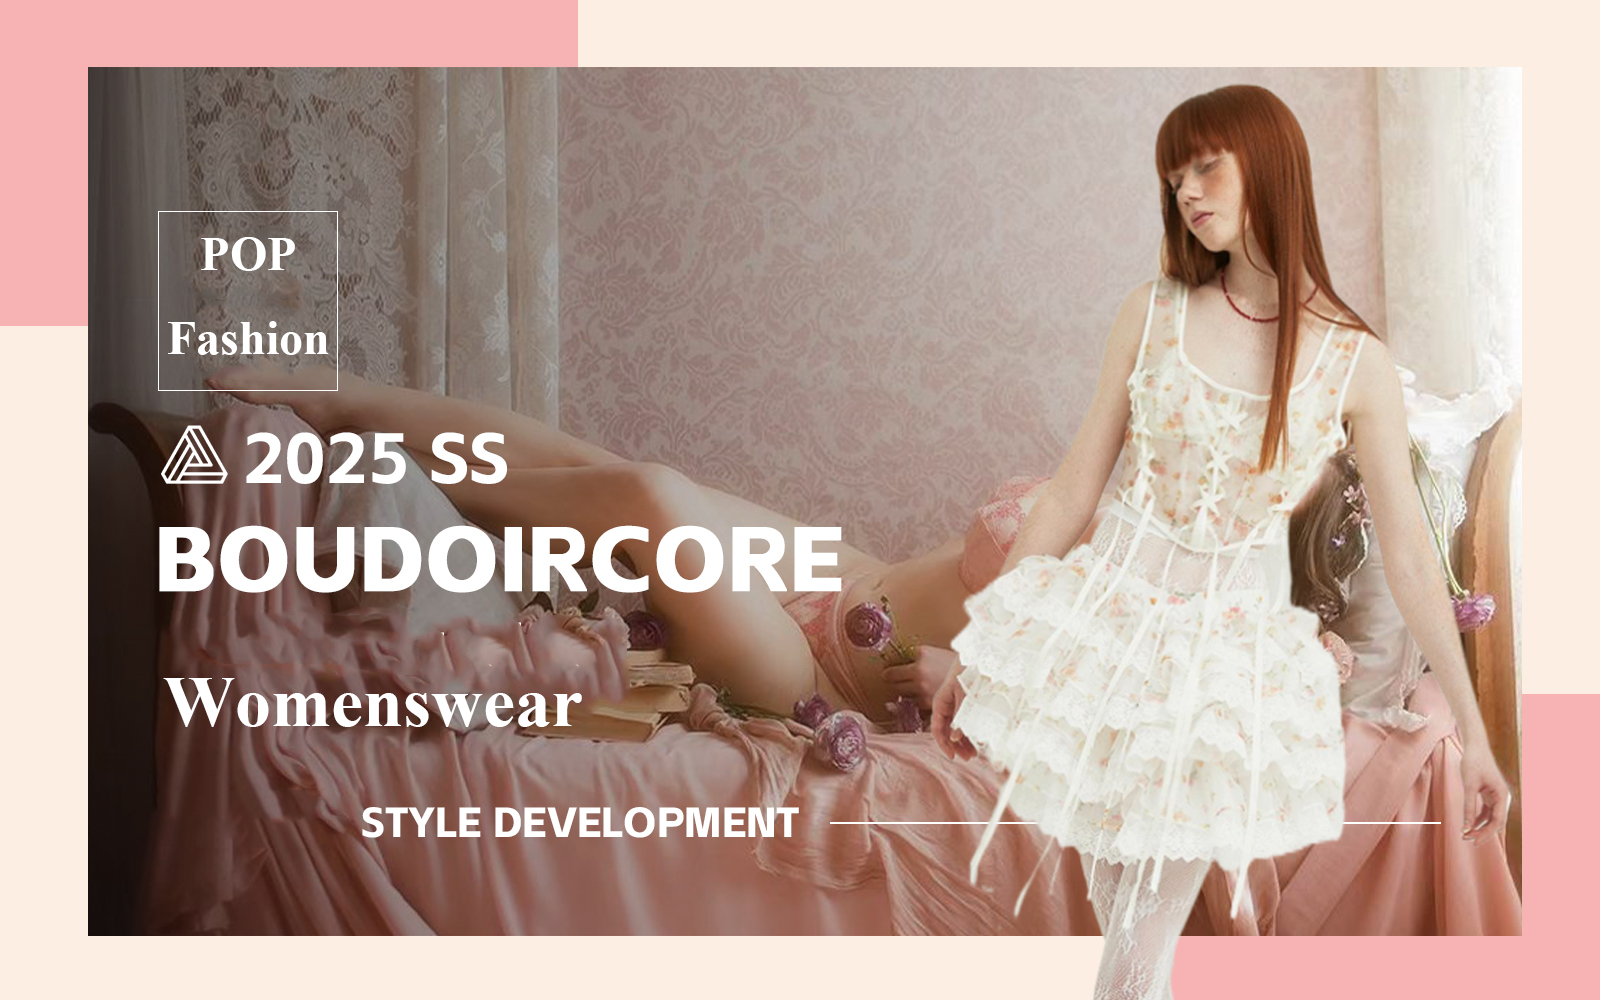 Boudoircore -- The Design Development of Women's Underwear & Loungewear